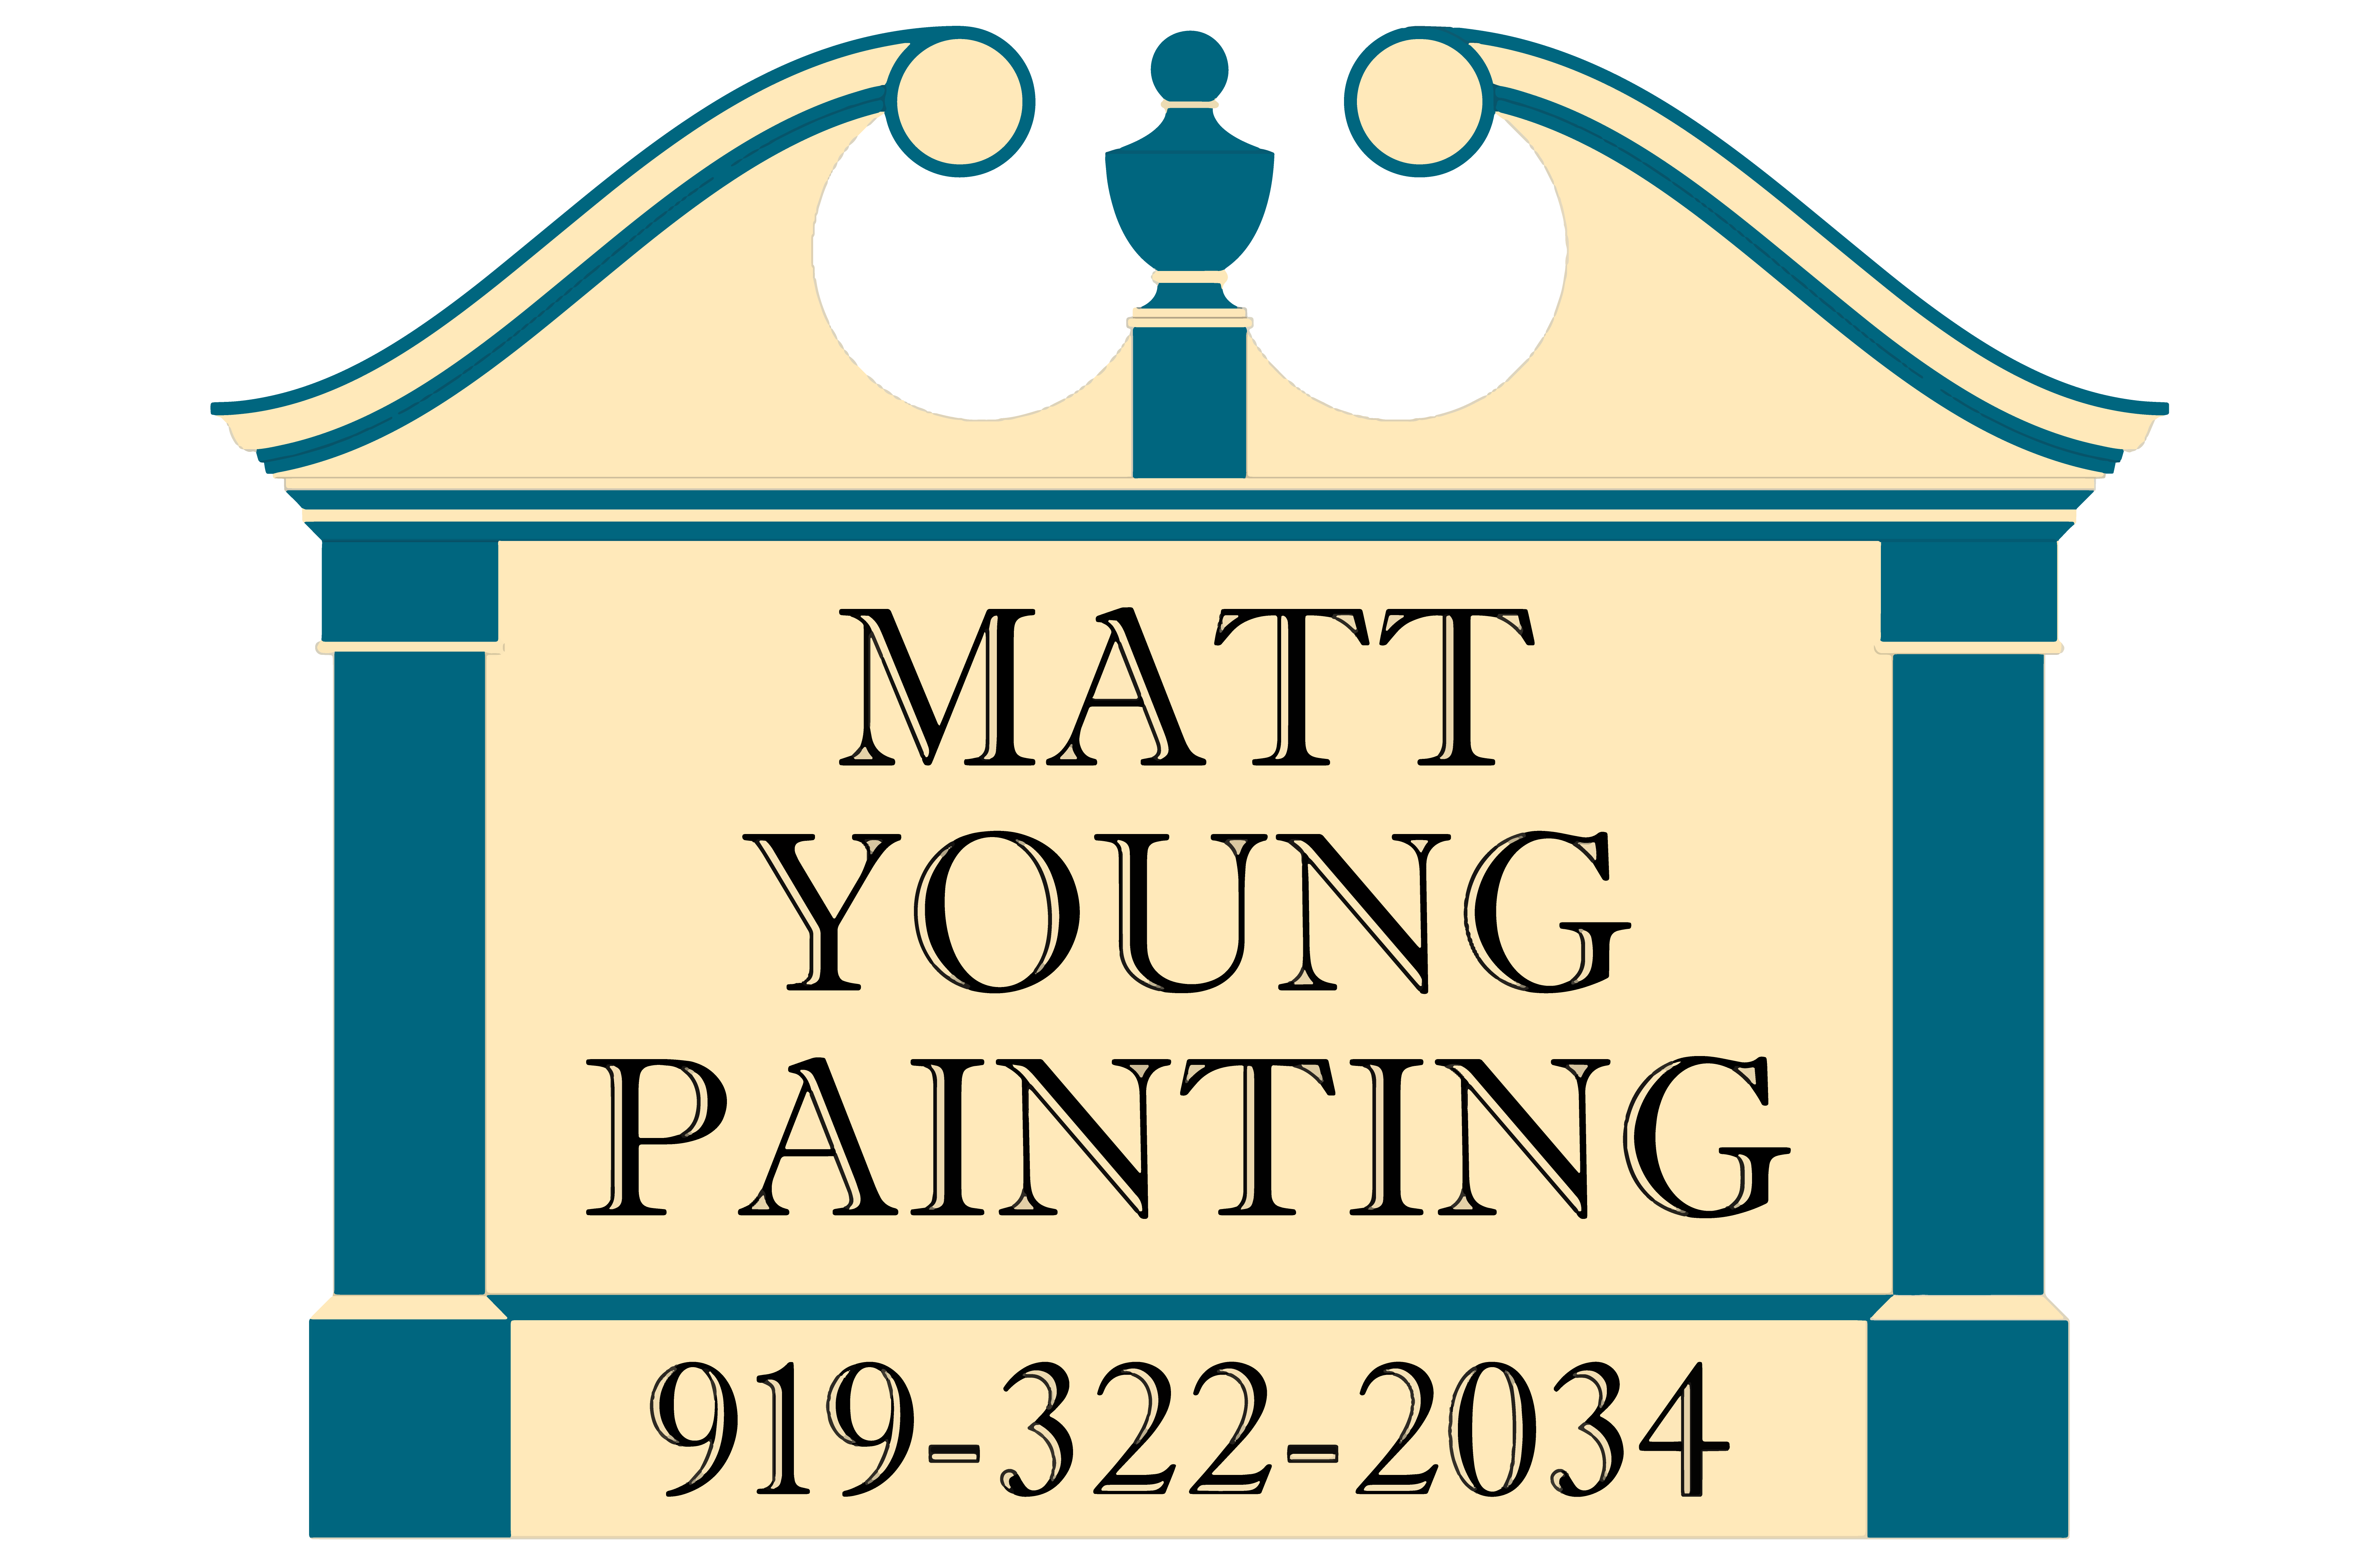 Matt Young Painting